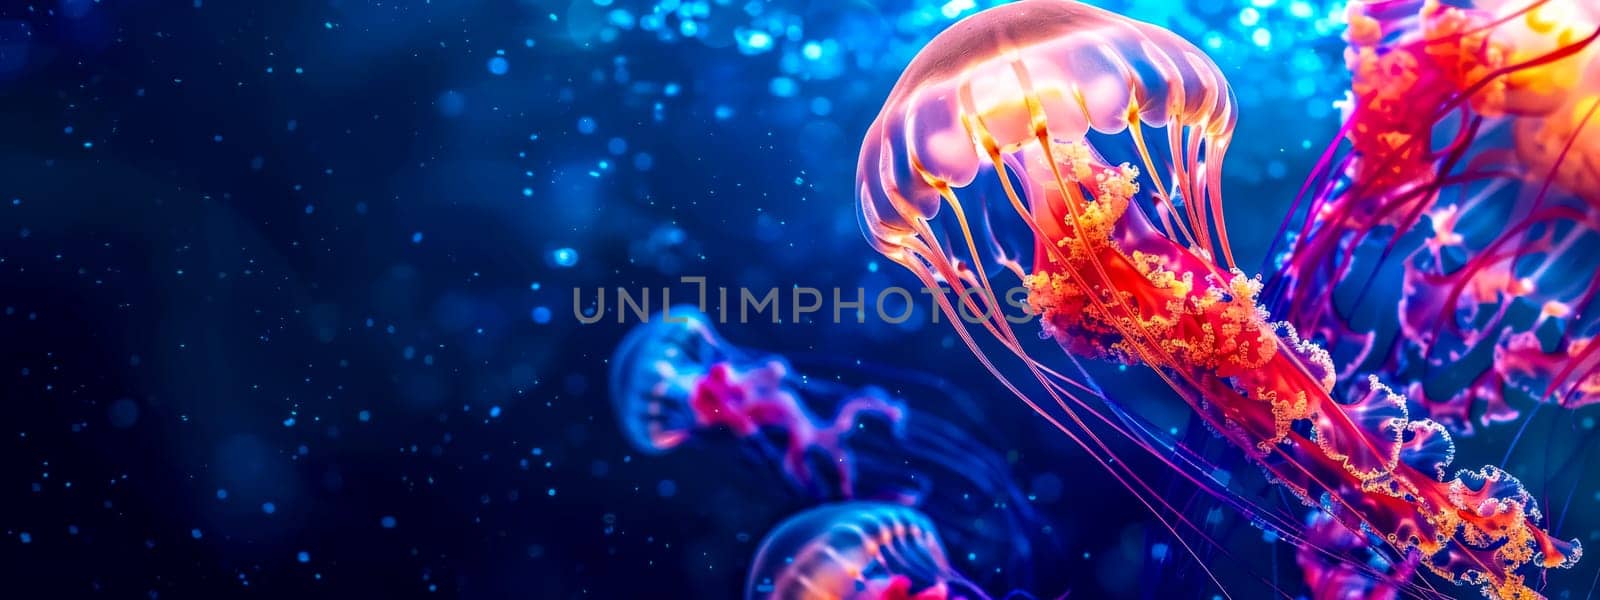 Vibrant jellyfish swimming in deep blue sea by Edophoto